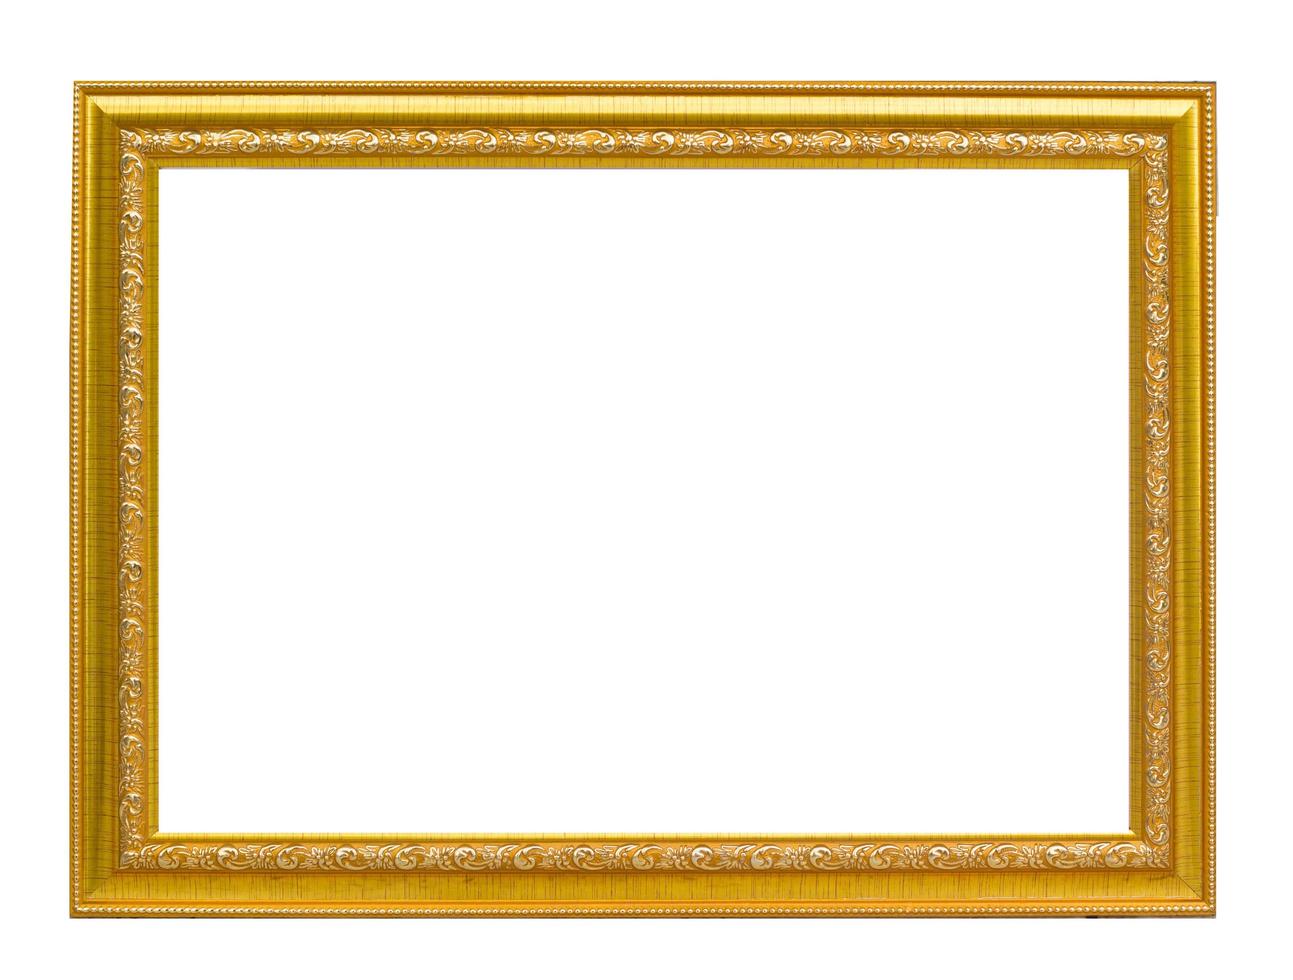 antique golden frame isolated on white background photo